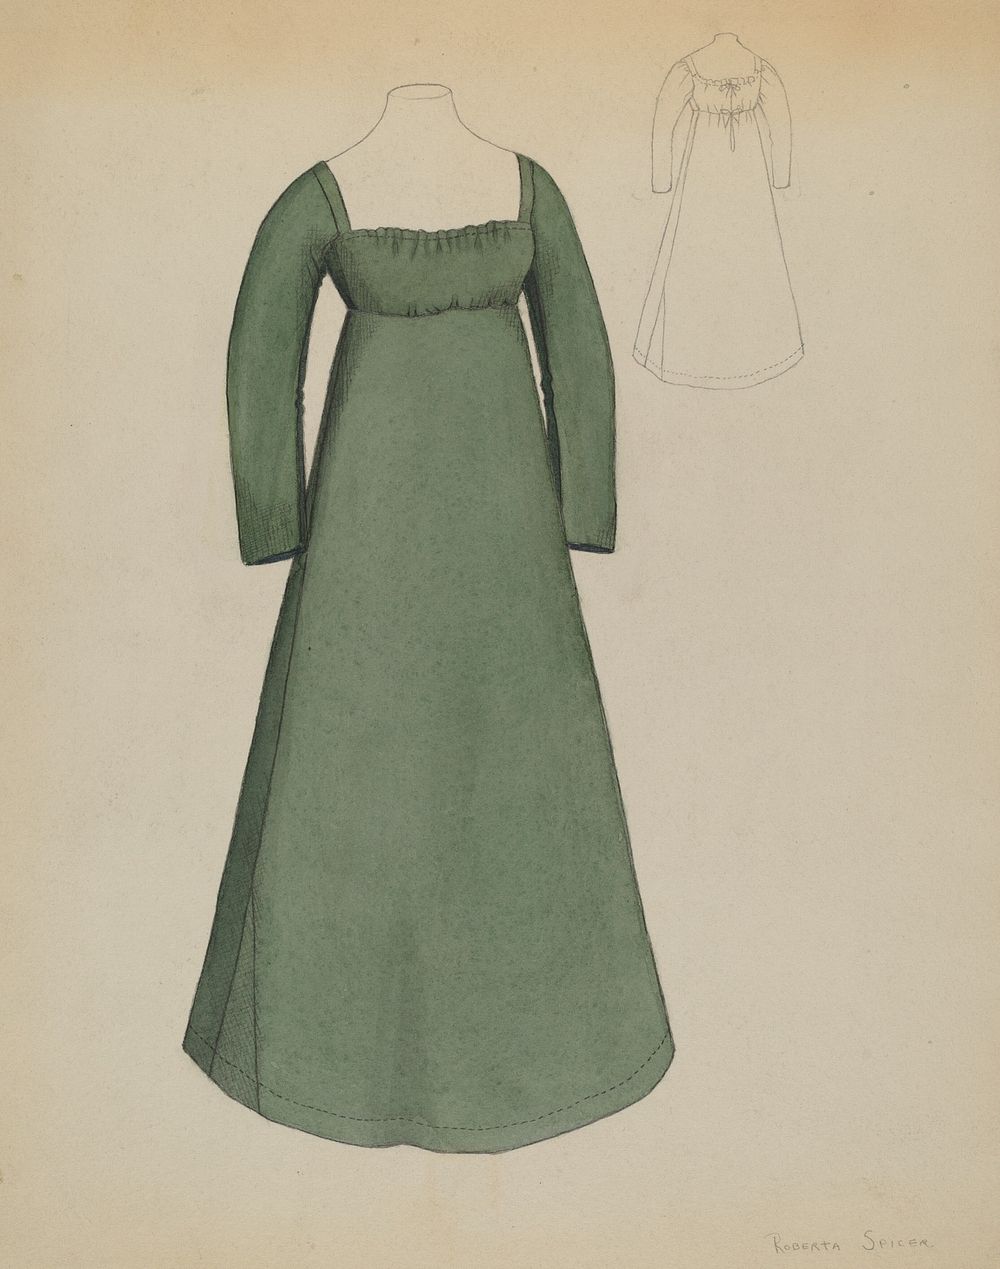 Dress (c. 1936) by Roberta Spicer.  